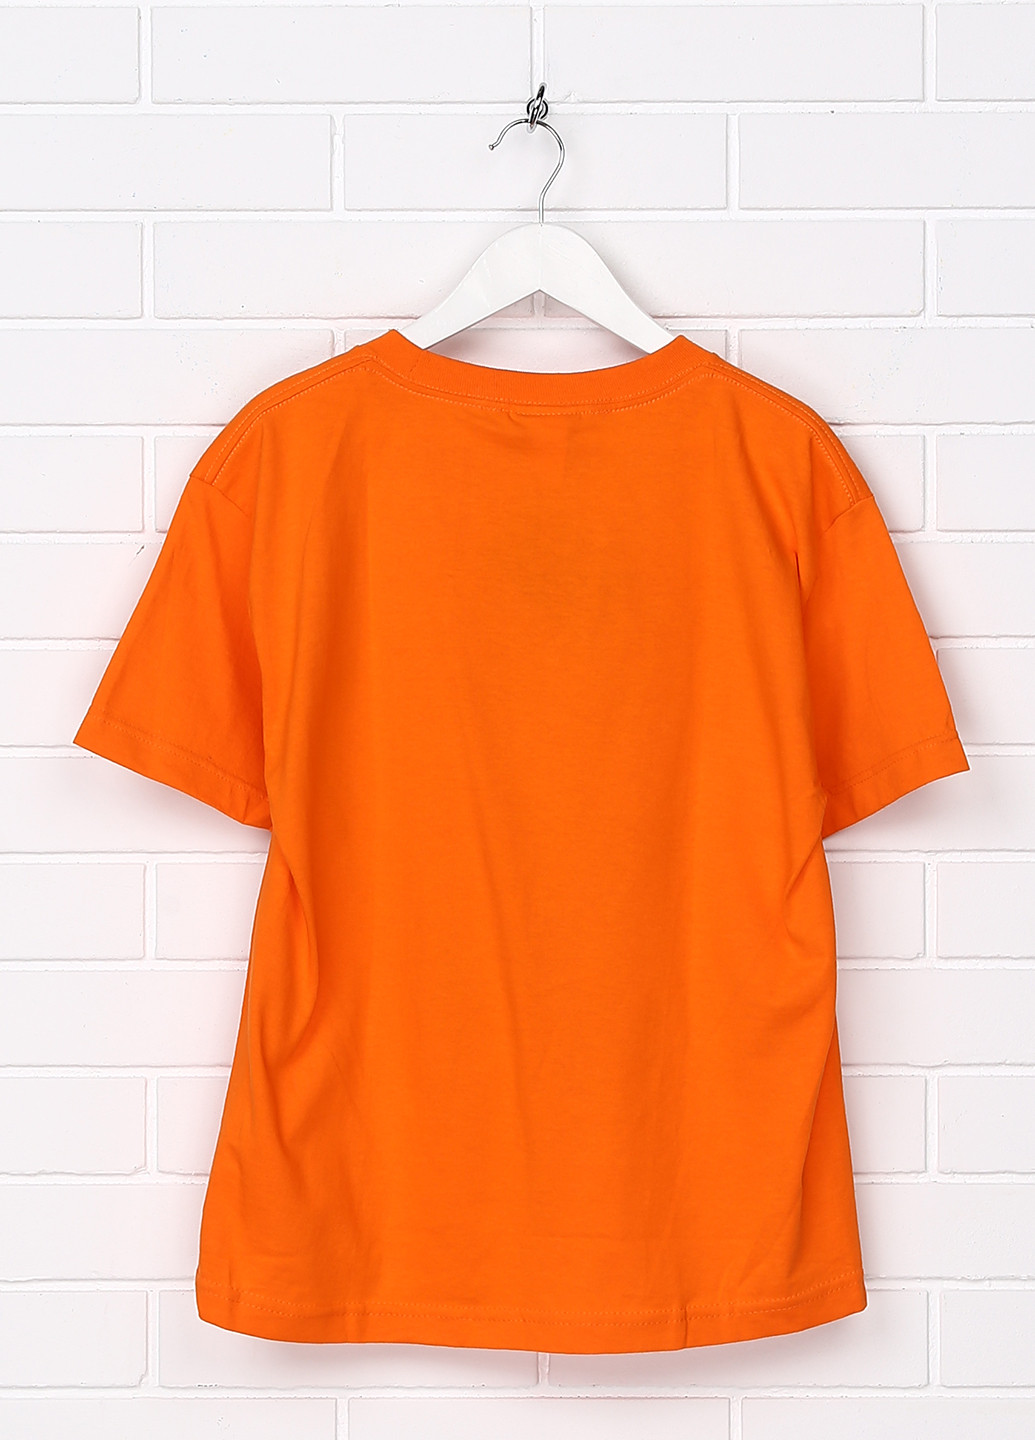 Оранжевая летняя футболка с коротким рукавом Nickelodeon